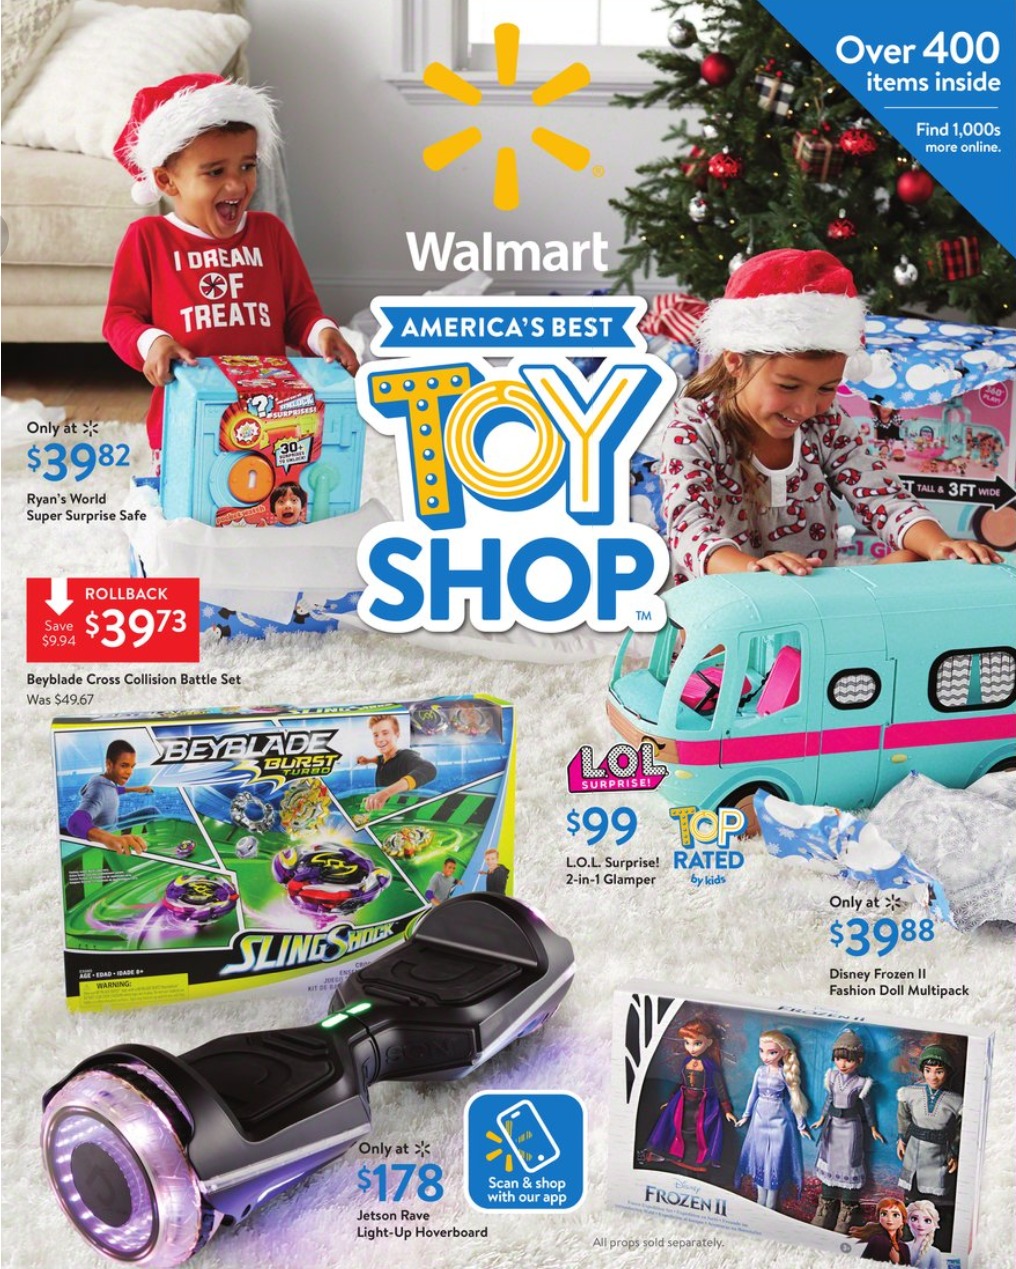 Walmart Toys Catalogue 2019